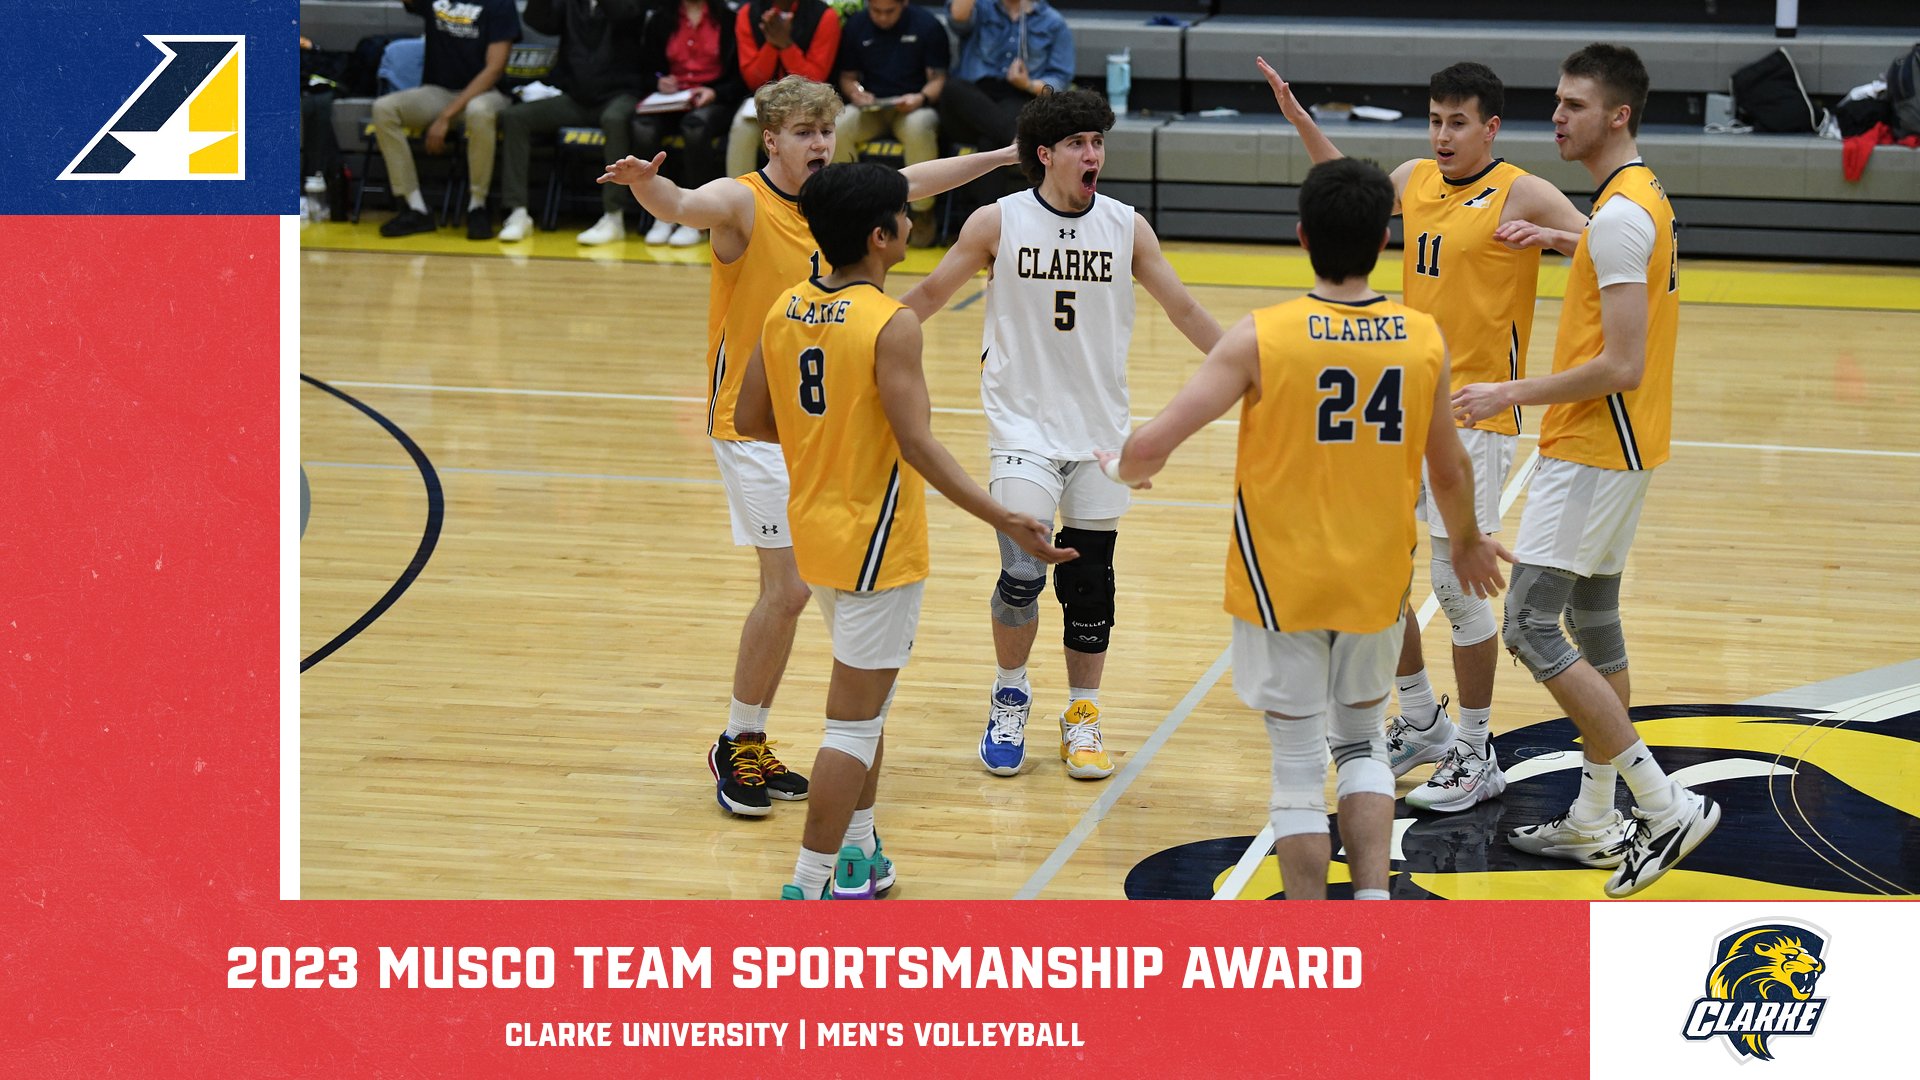 Clarke University Men’s Volleyball Earns 2023 Musco Team Sportsmanship Award